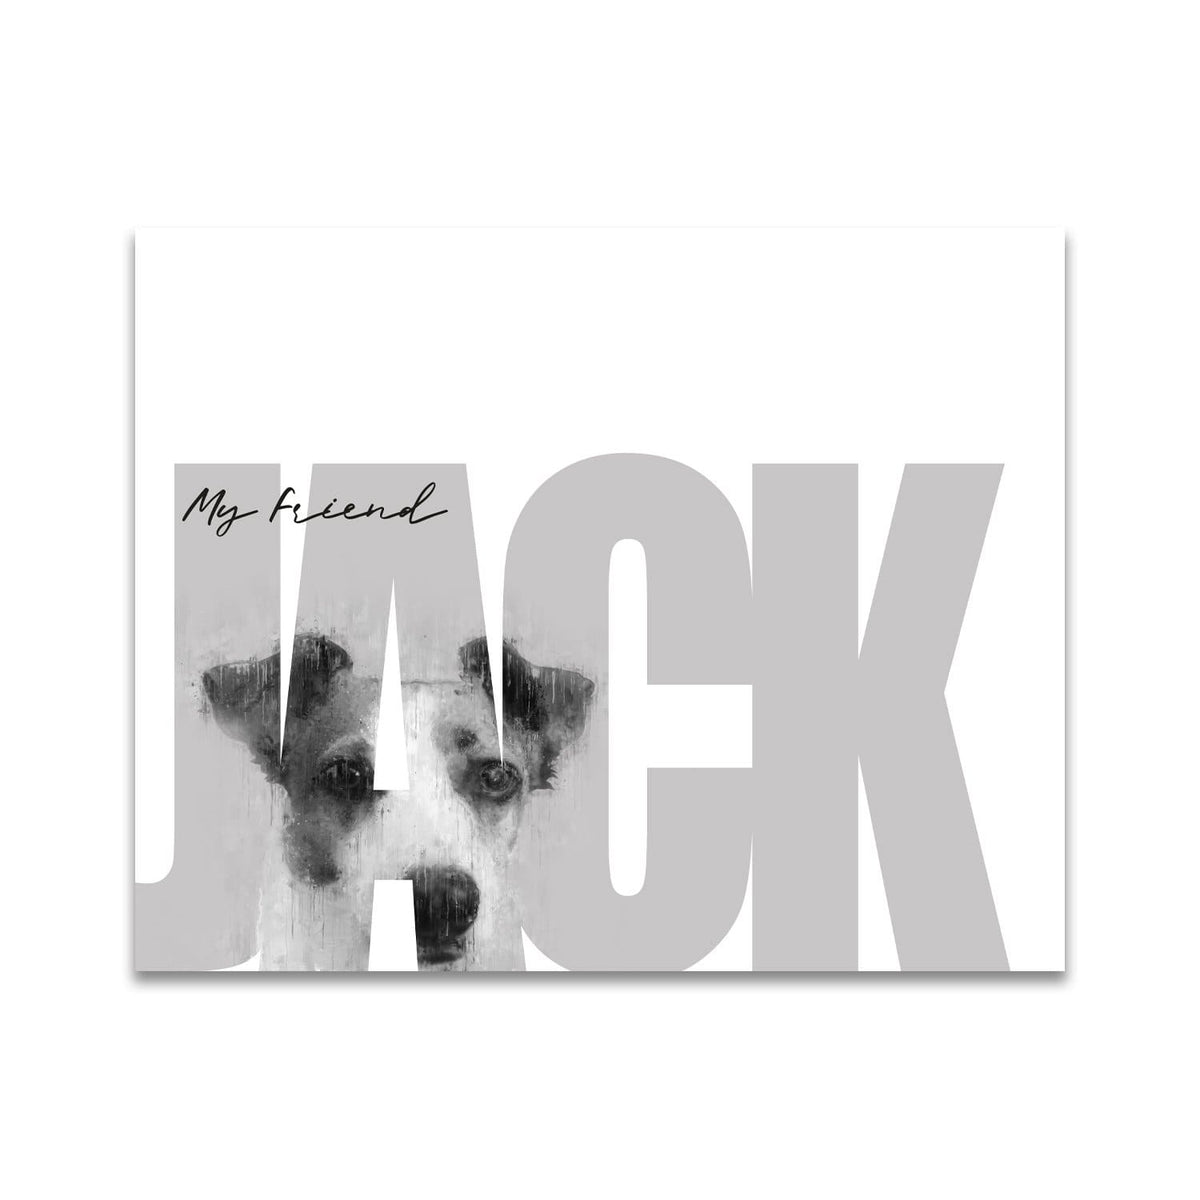 Cute art of Jack Russell Terrier dog peeking out